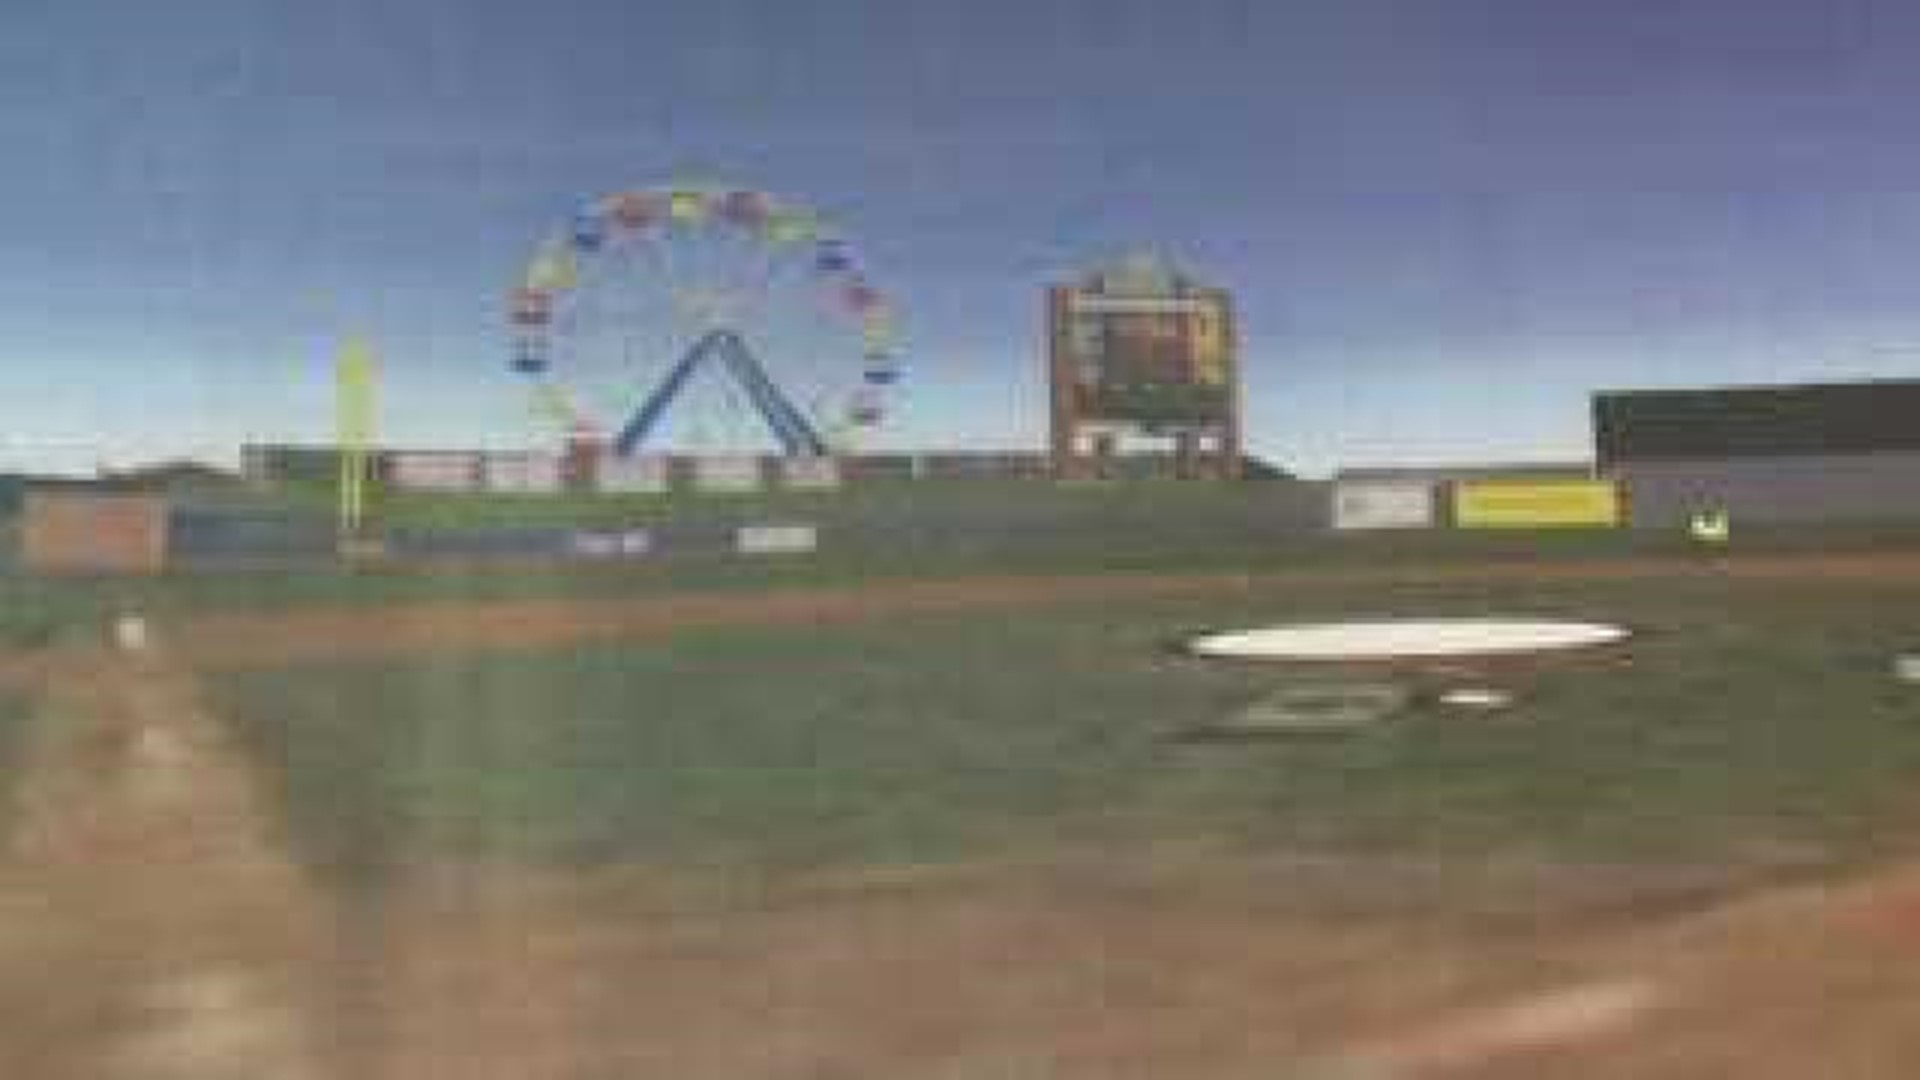 Modern Woodman propose addition of a ferris wheel to ballpark